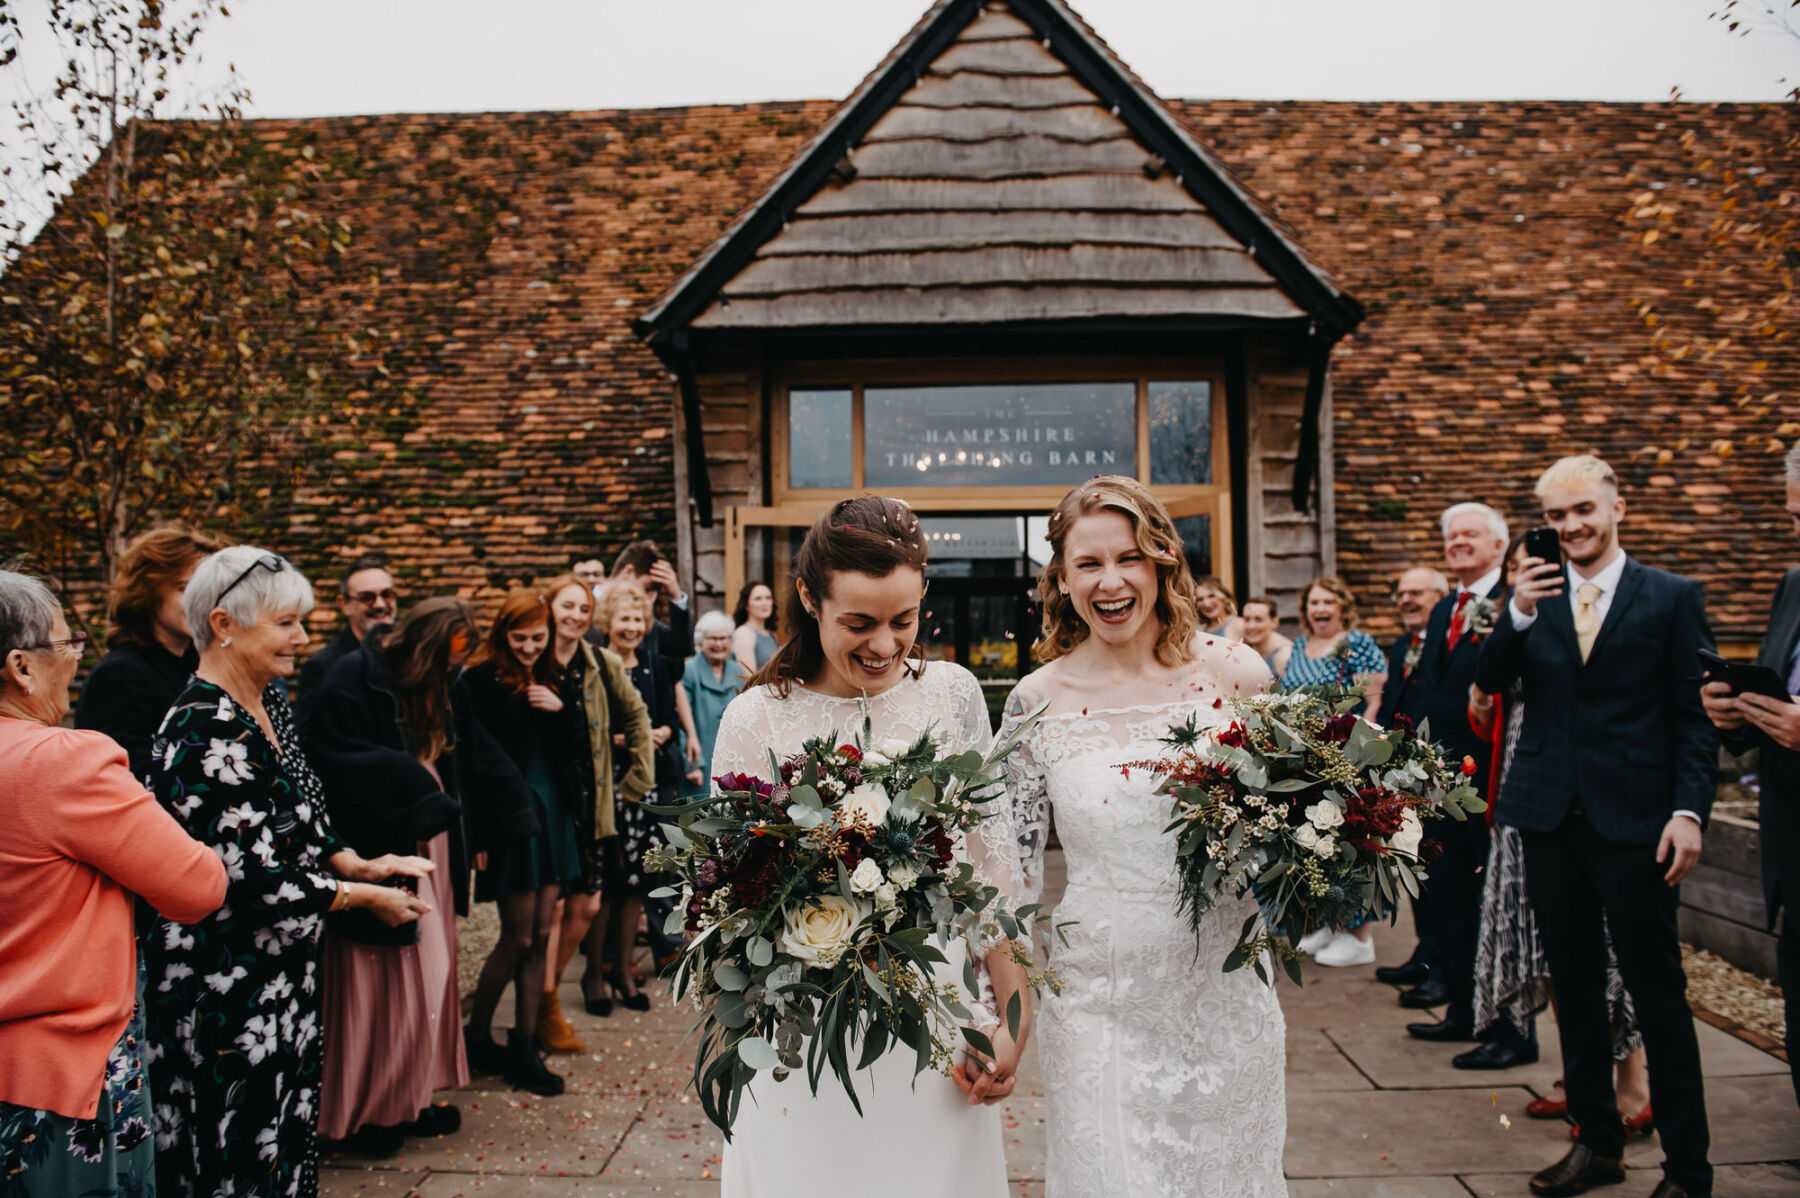 LGBTQ+ wedding - confetti time, newlywed brides at Silchester Farm wedding venue, Hampshire. Jessica Grace Photography.